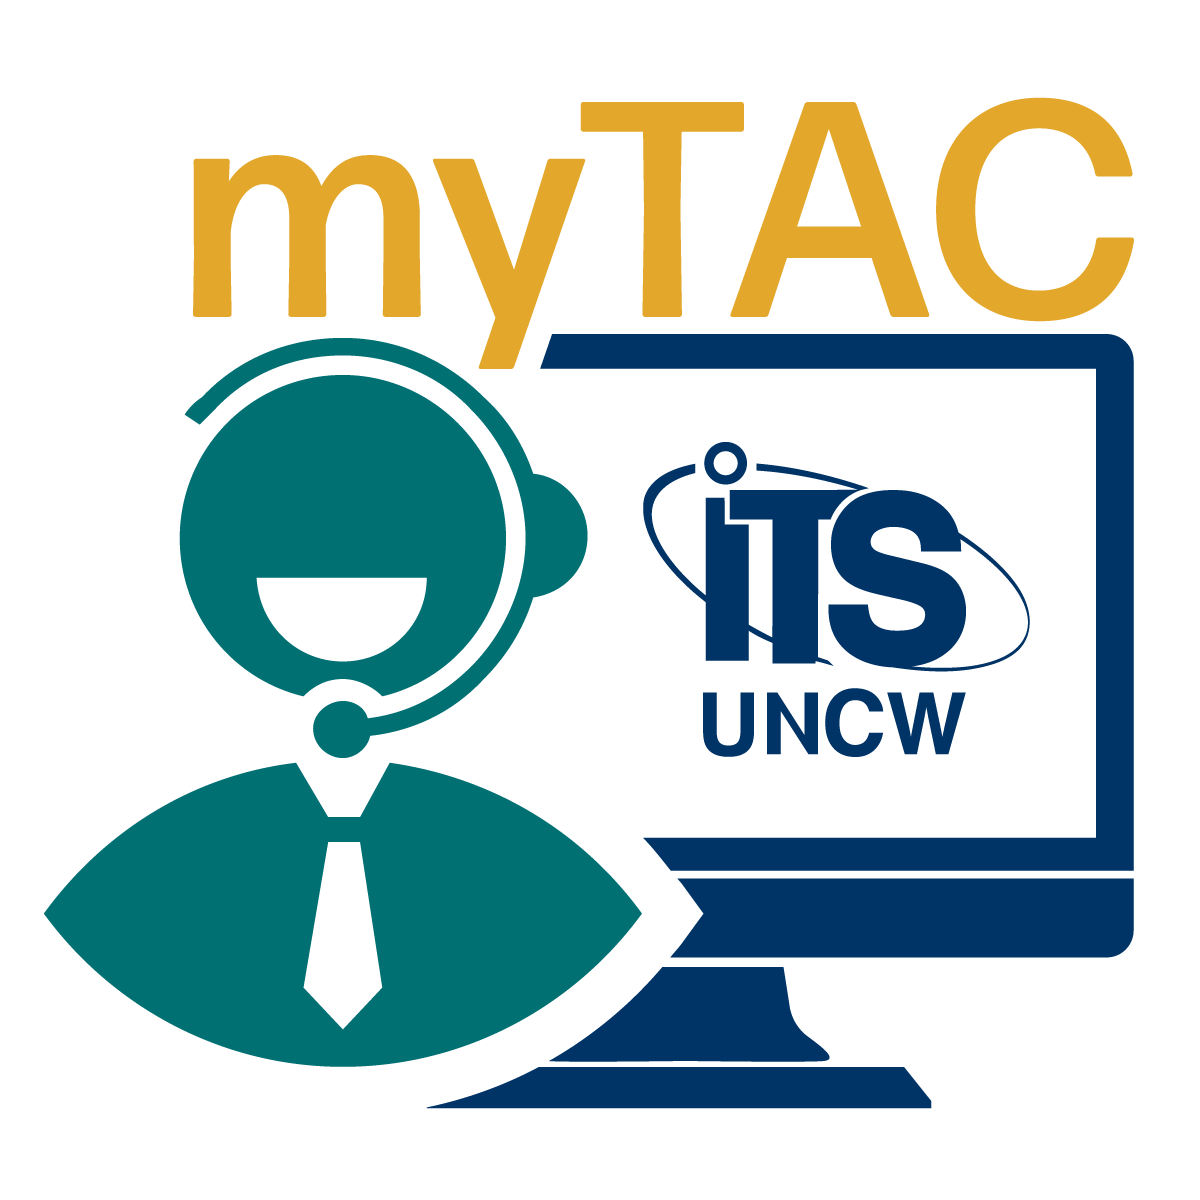 myTAC portal logo with a computer and service representative smiling